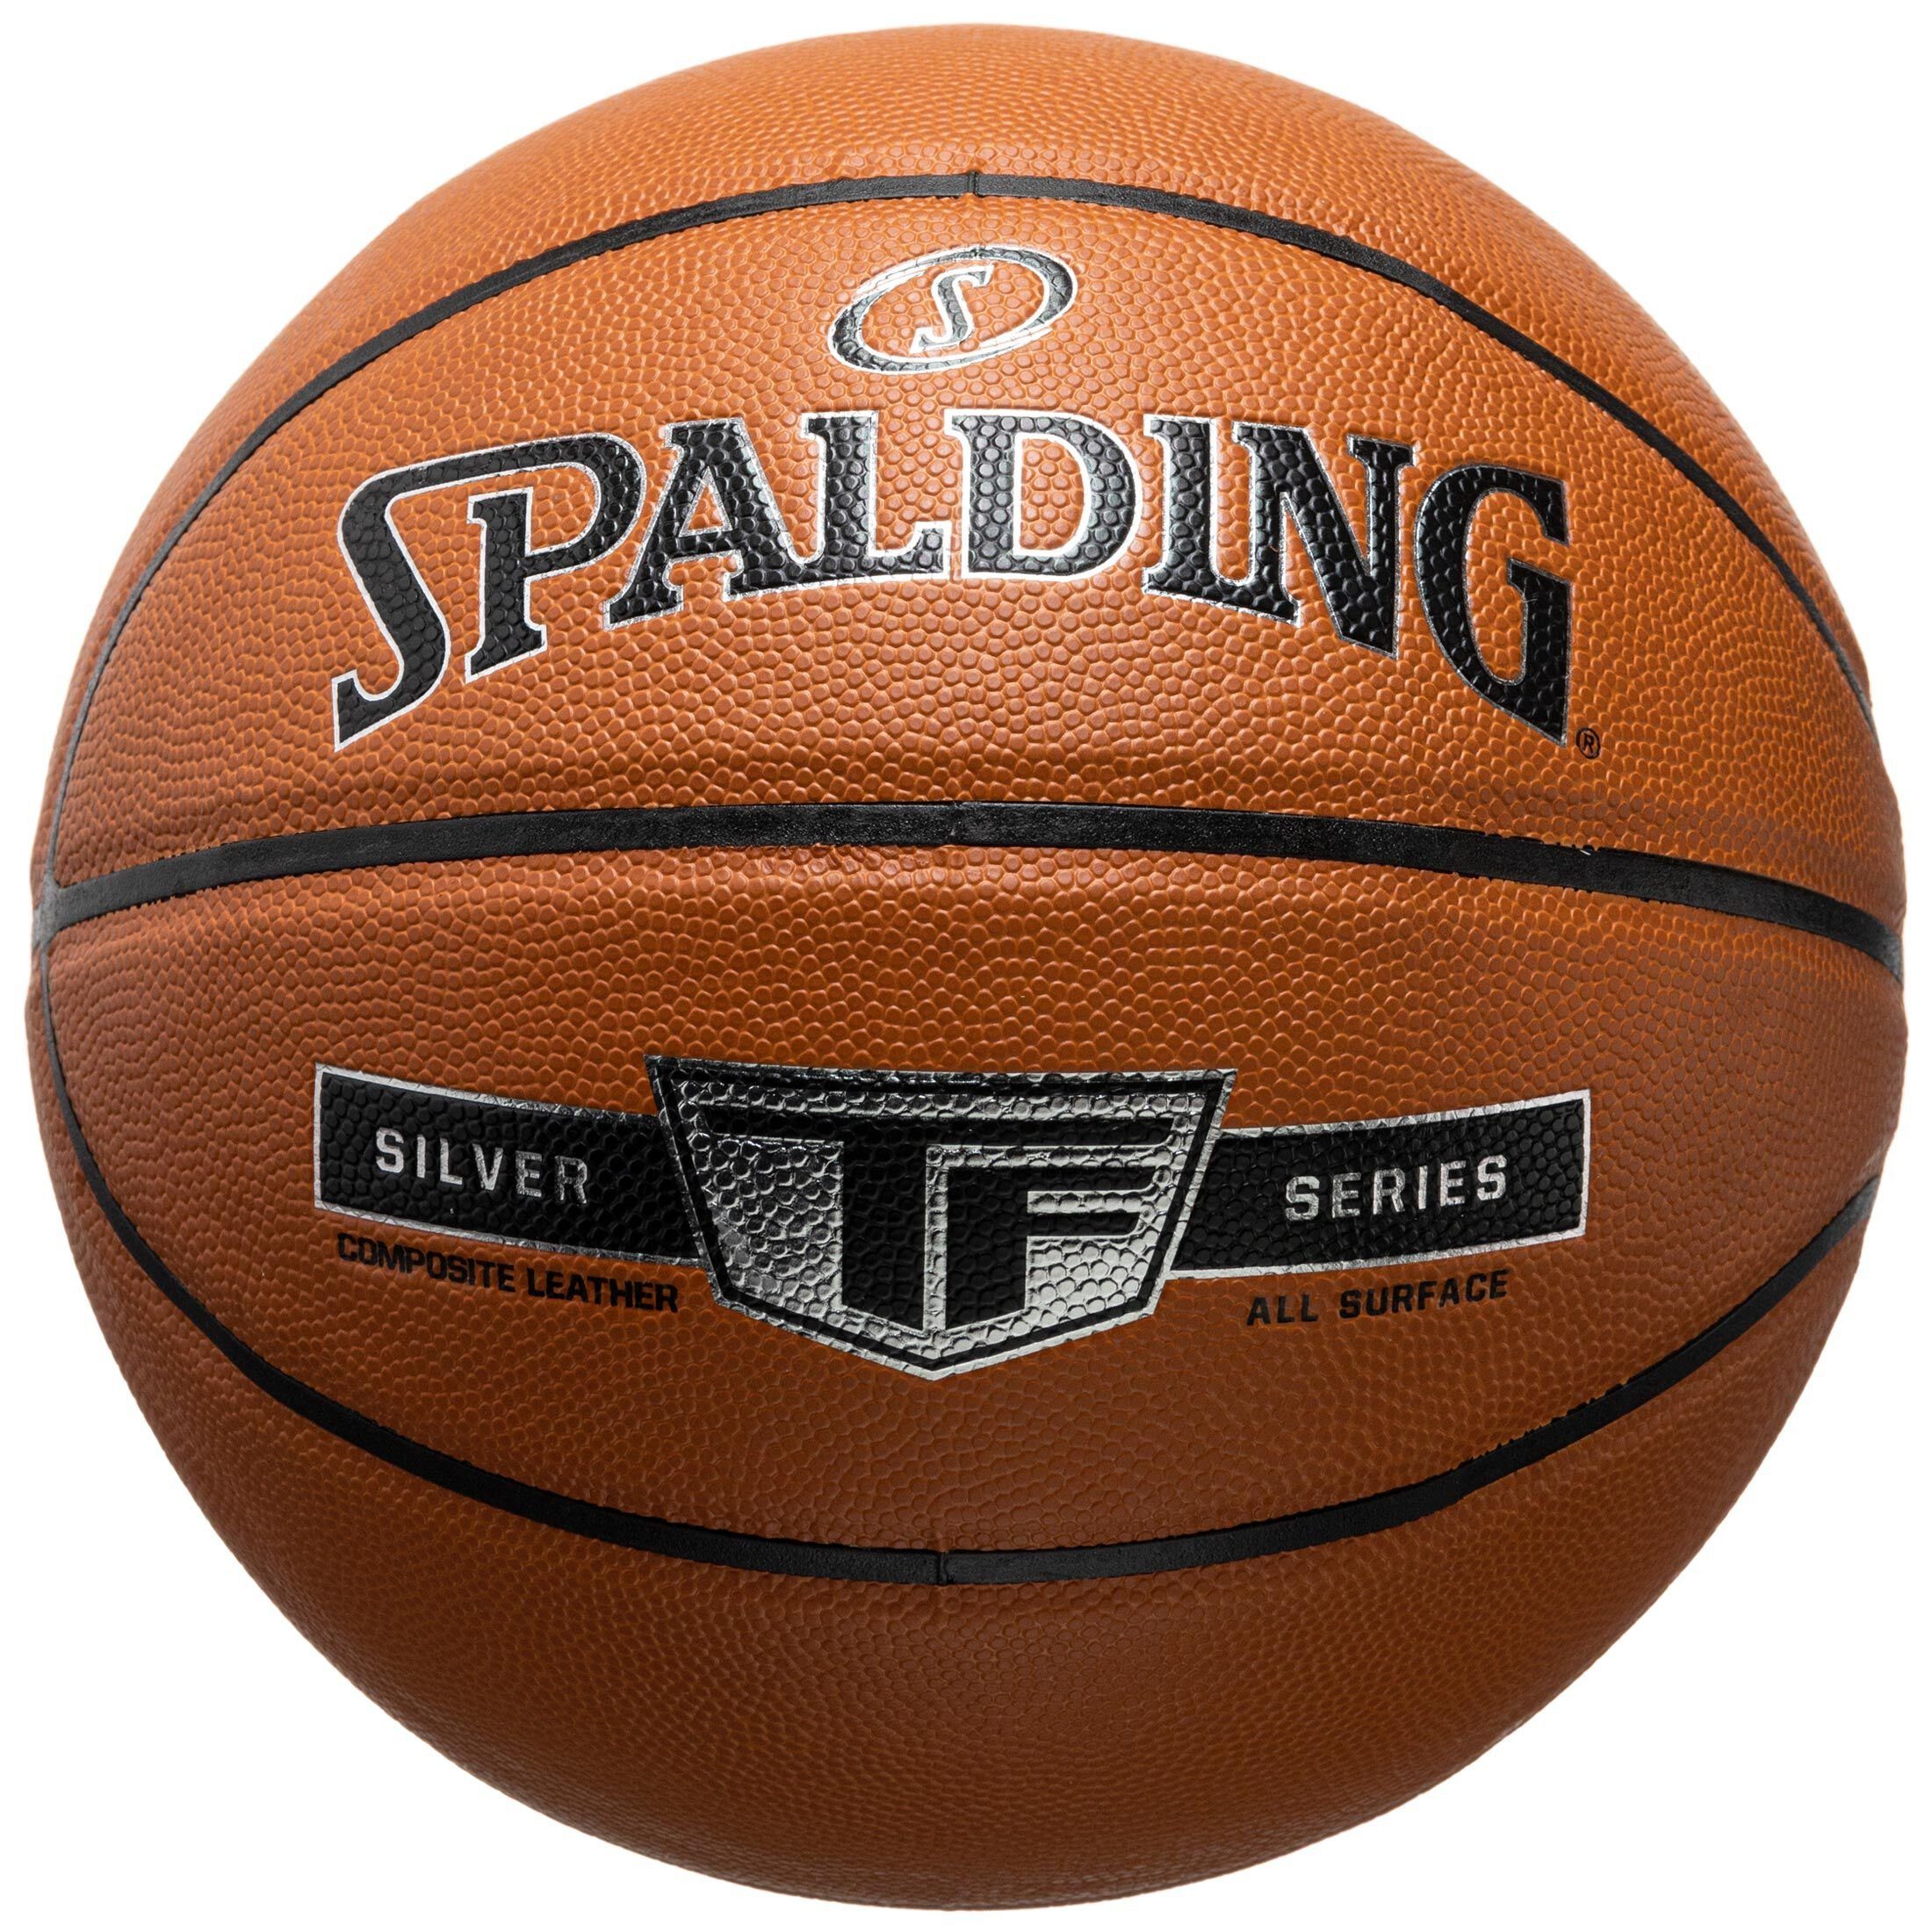 Spalding Basketball TF Silver Basketball